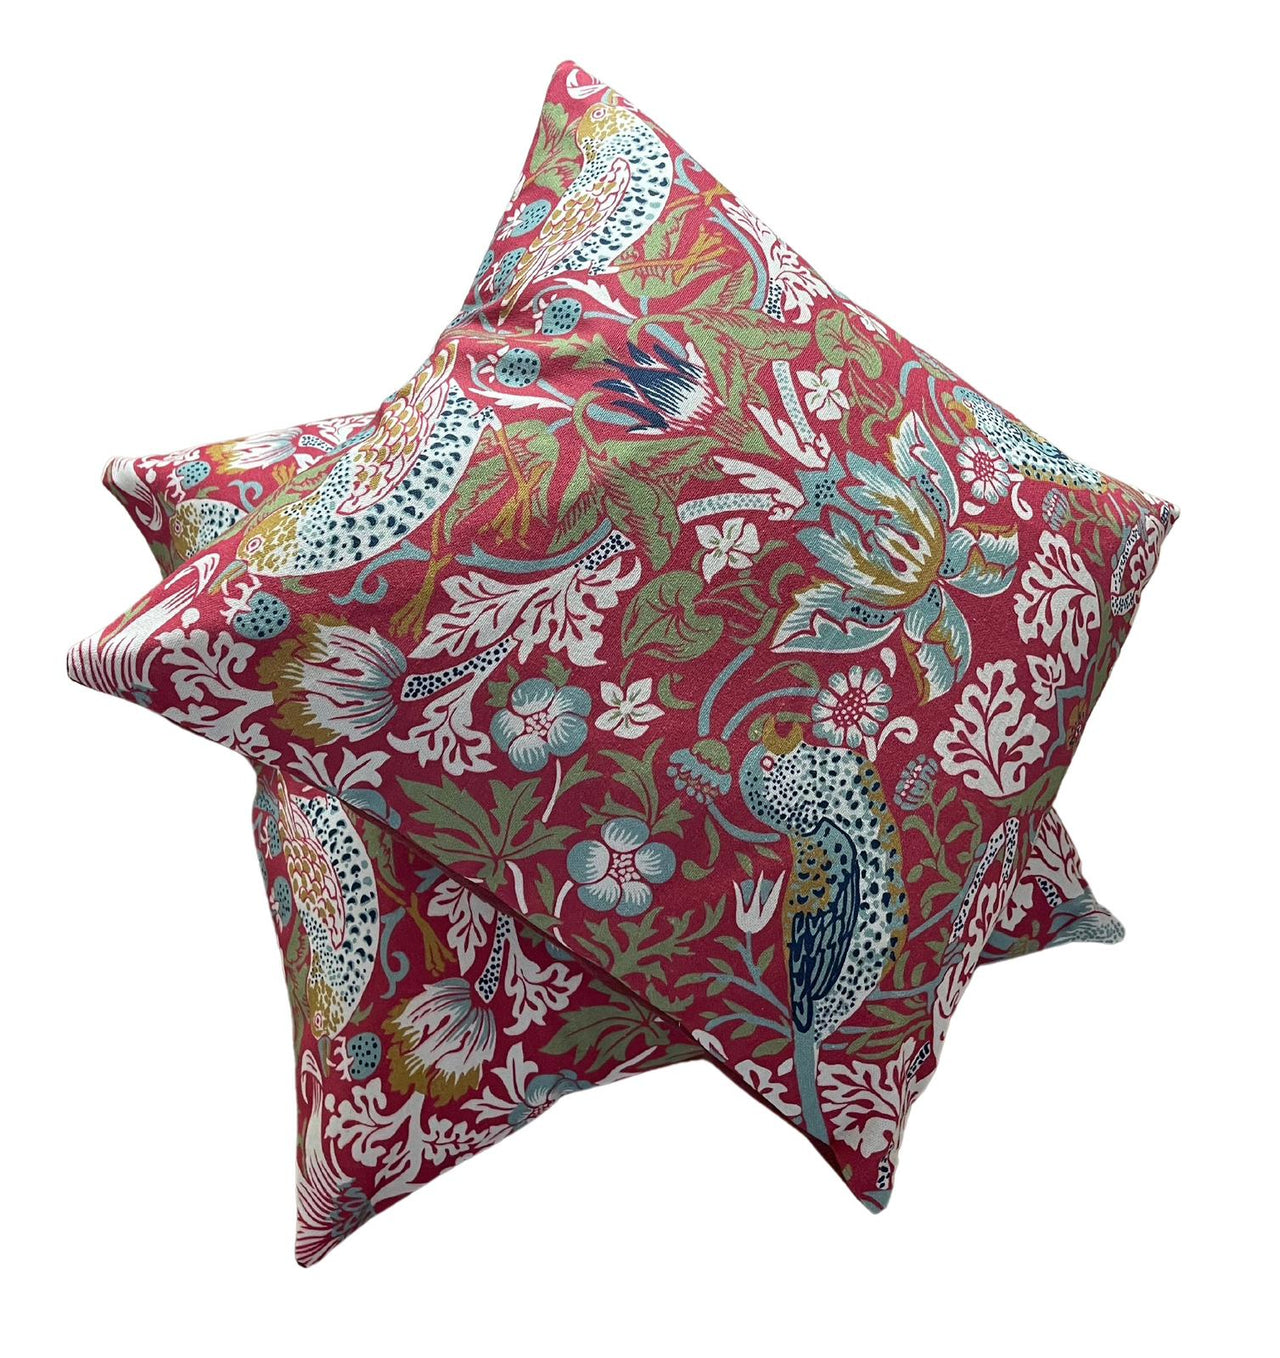 Strawberry Thief Decor / William Morris Red Cushion Cover - Bird Pattern Decorative Throw Pillow